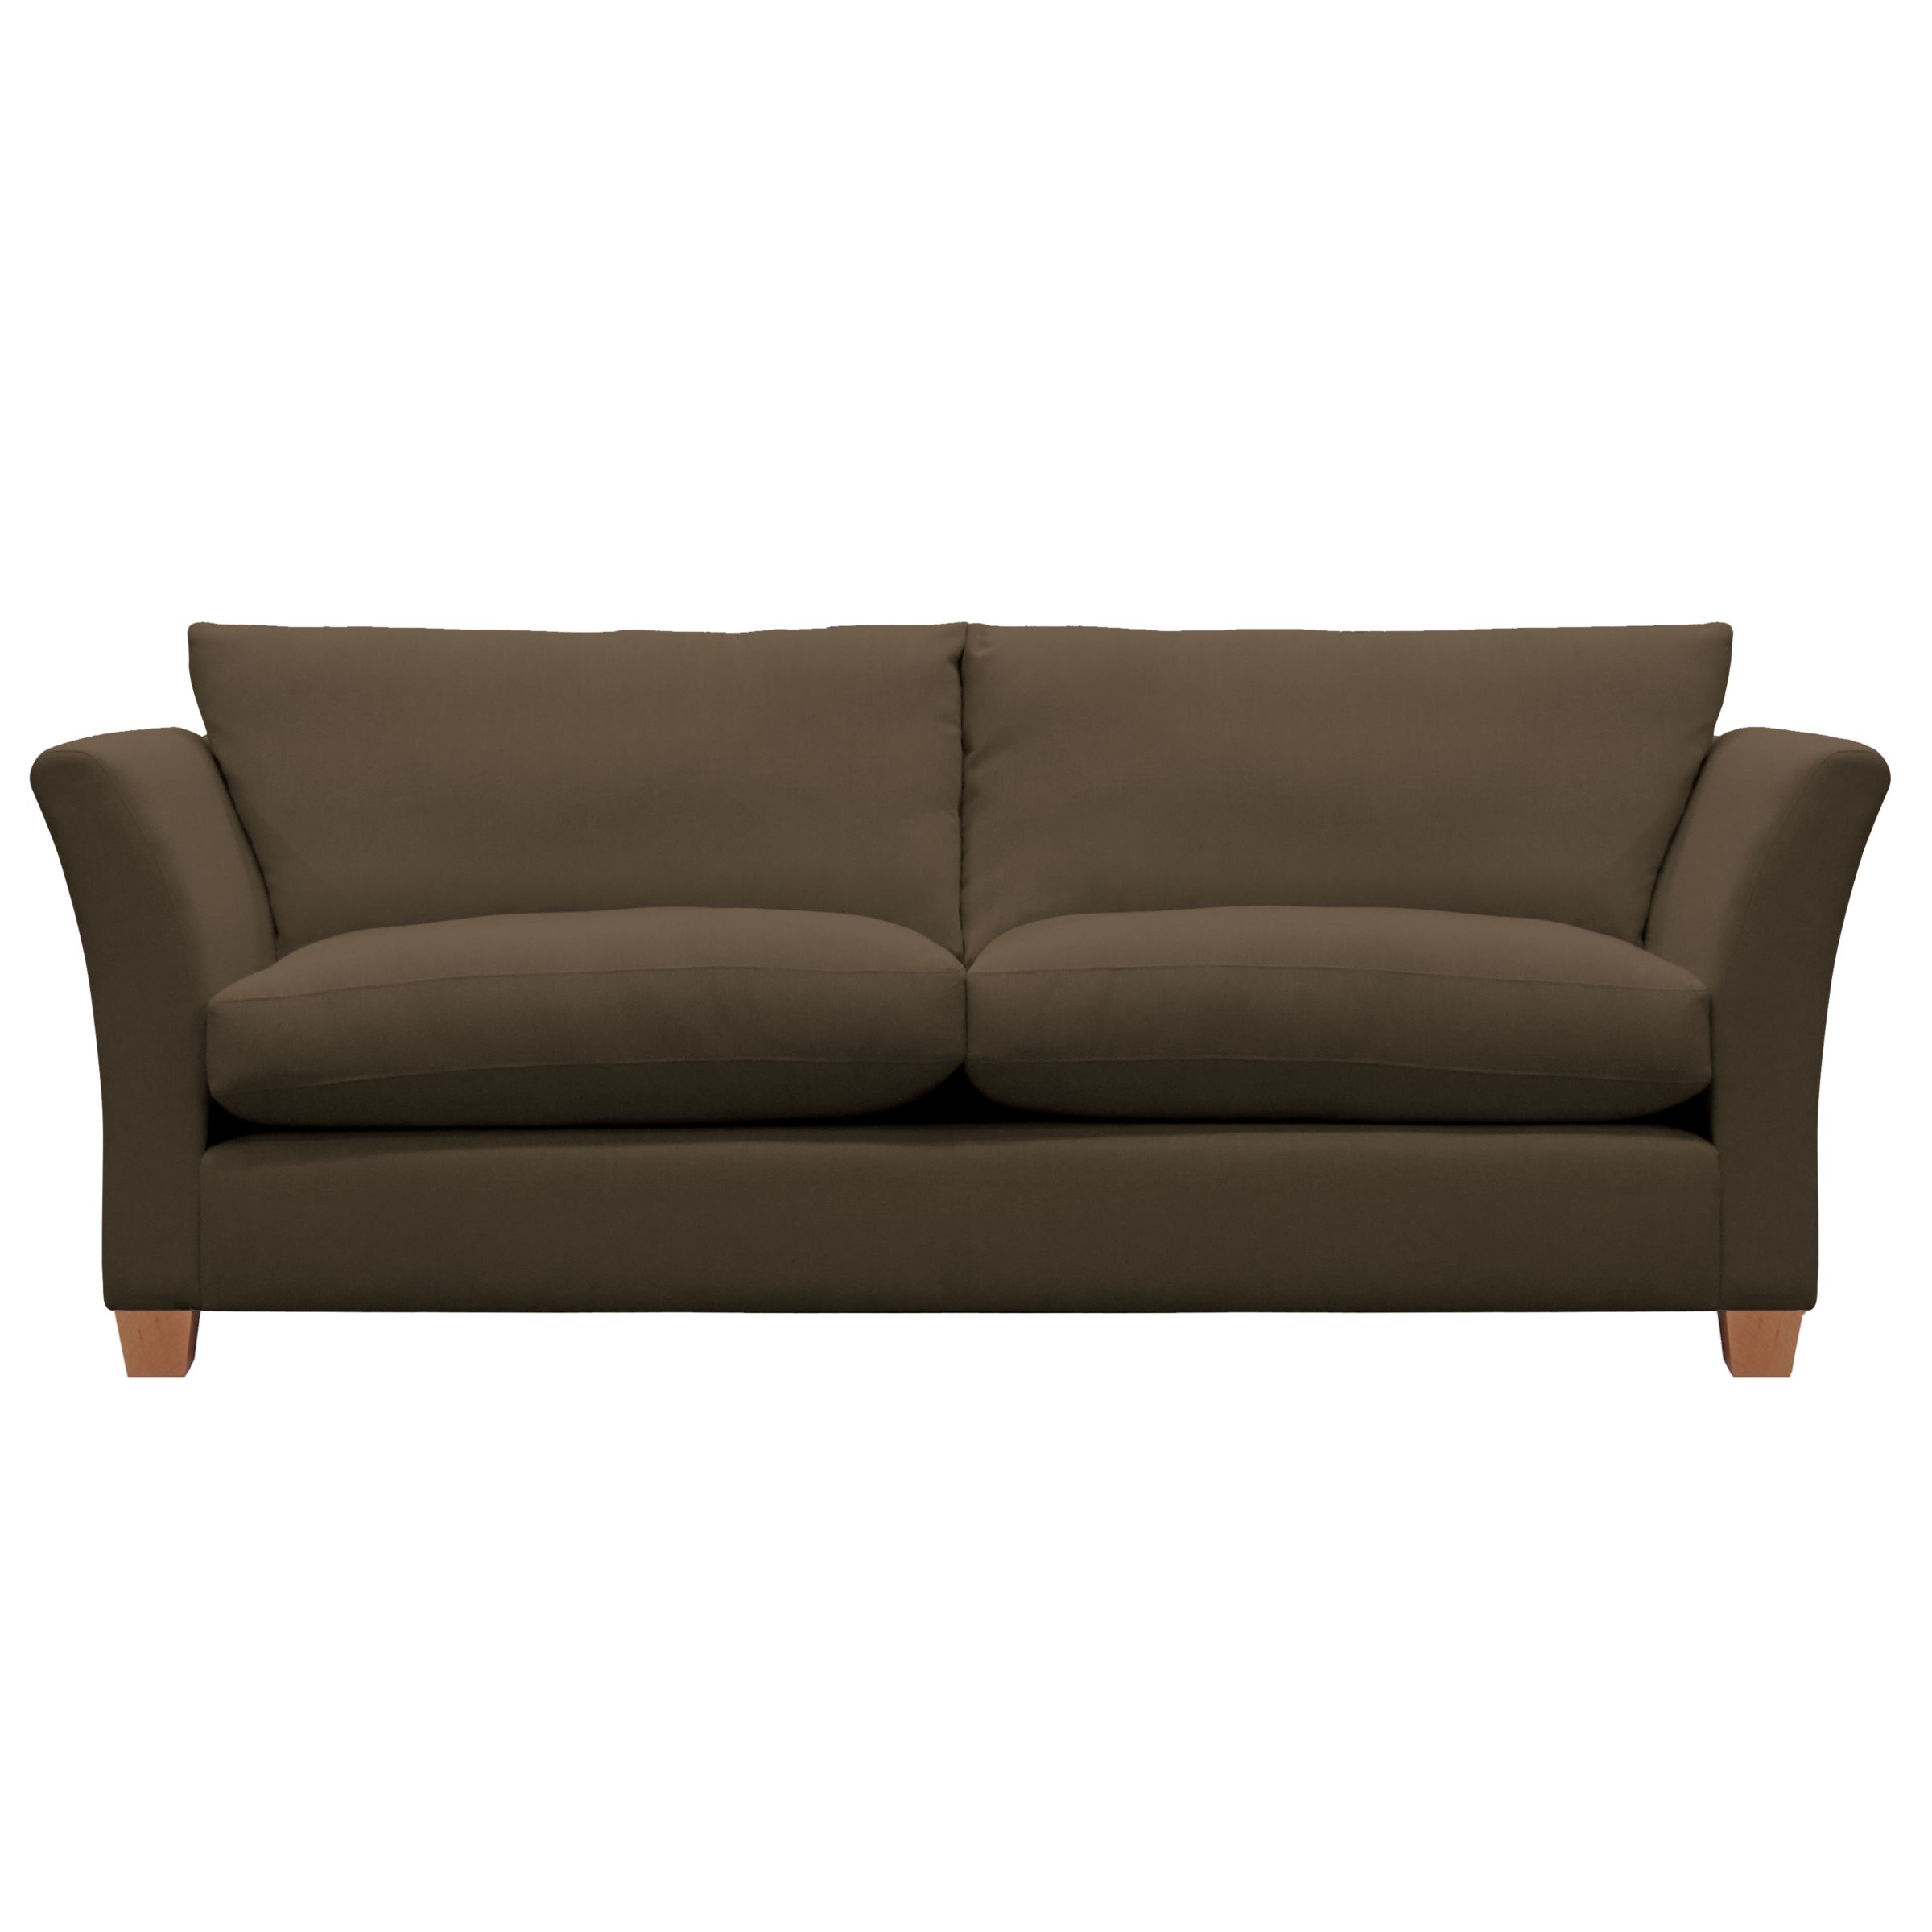 John Lewis Options Flare Arm Grand Sofa, Eaton Chocolate, width 225cm